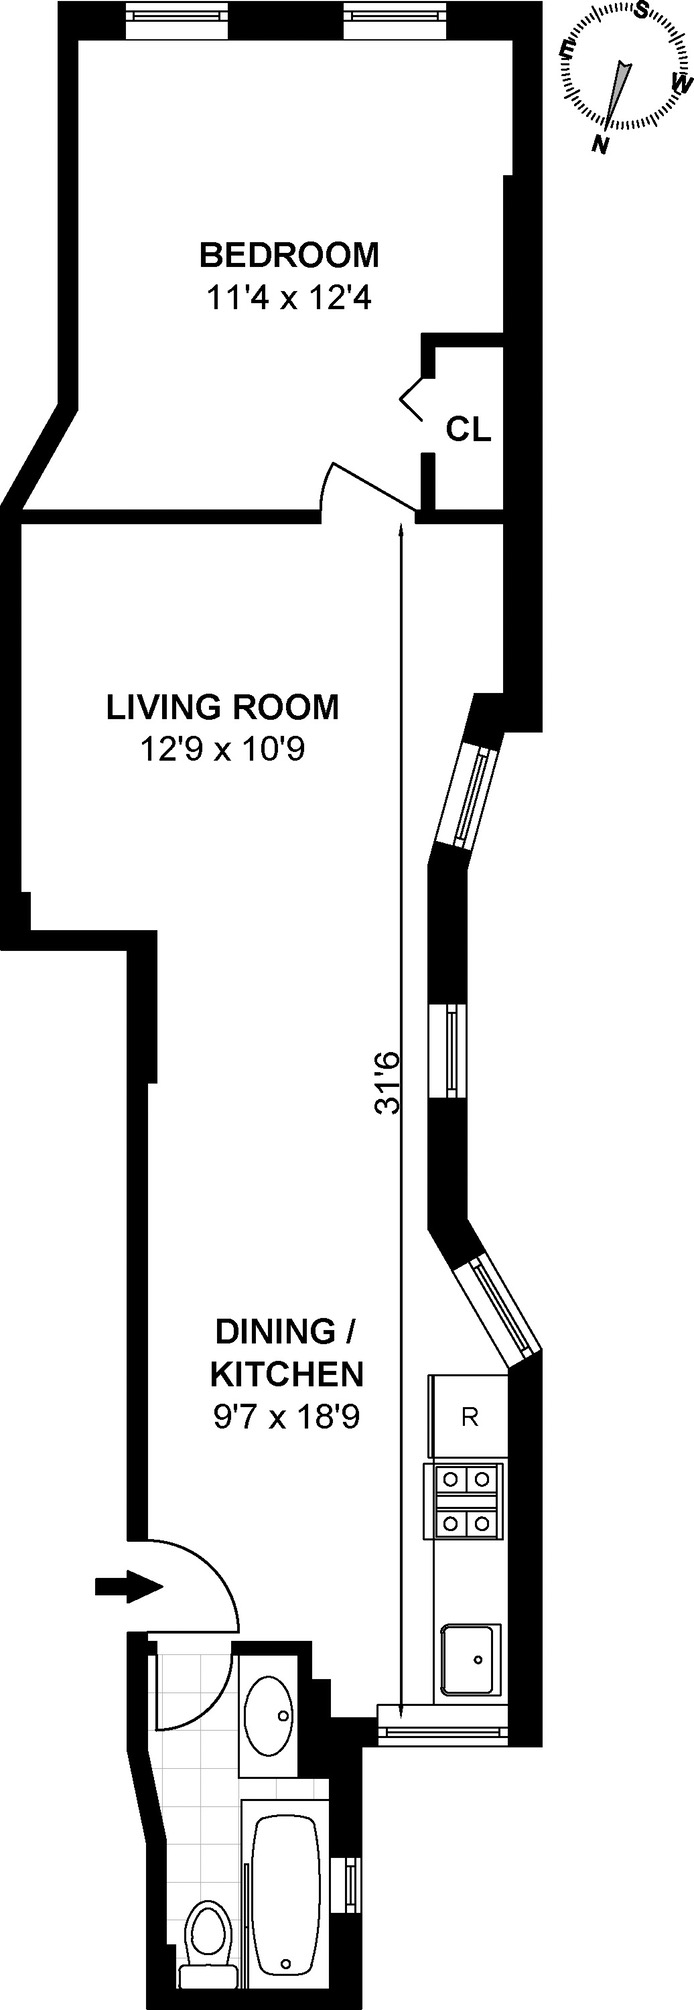 Floorplan for 135 Perry Street